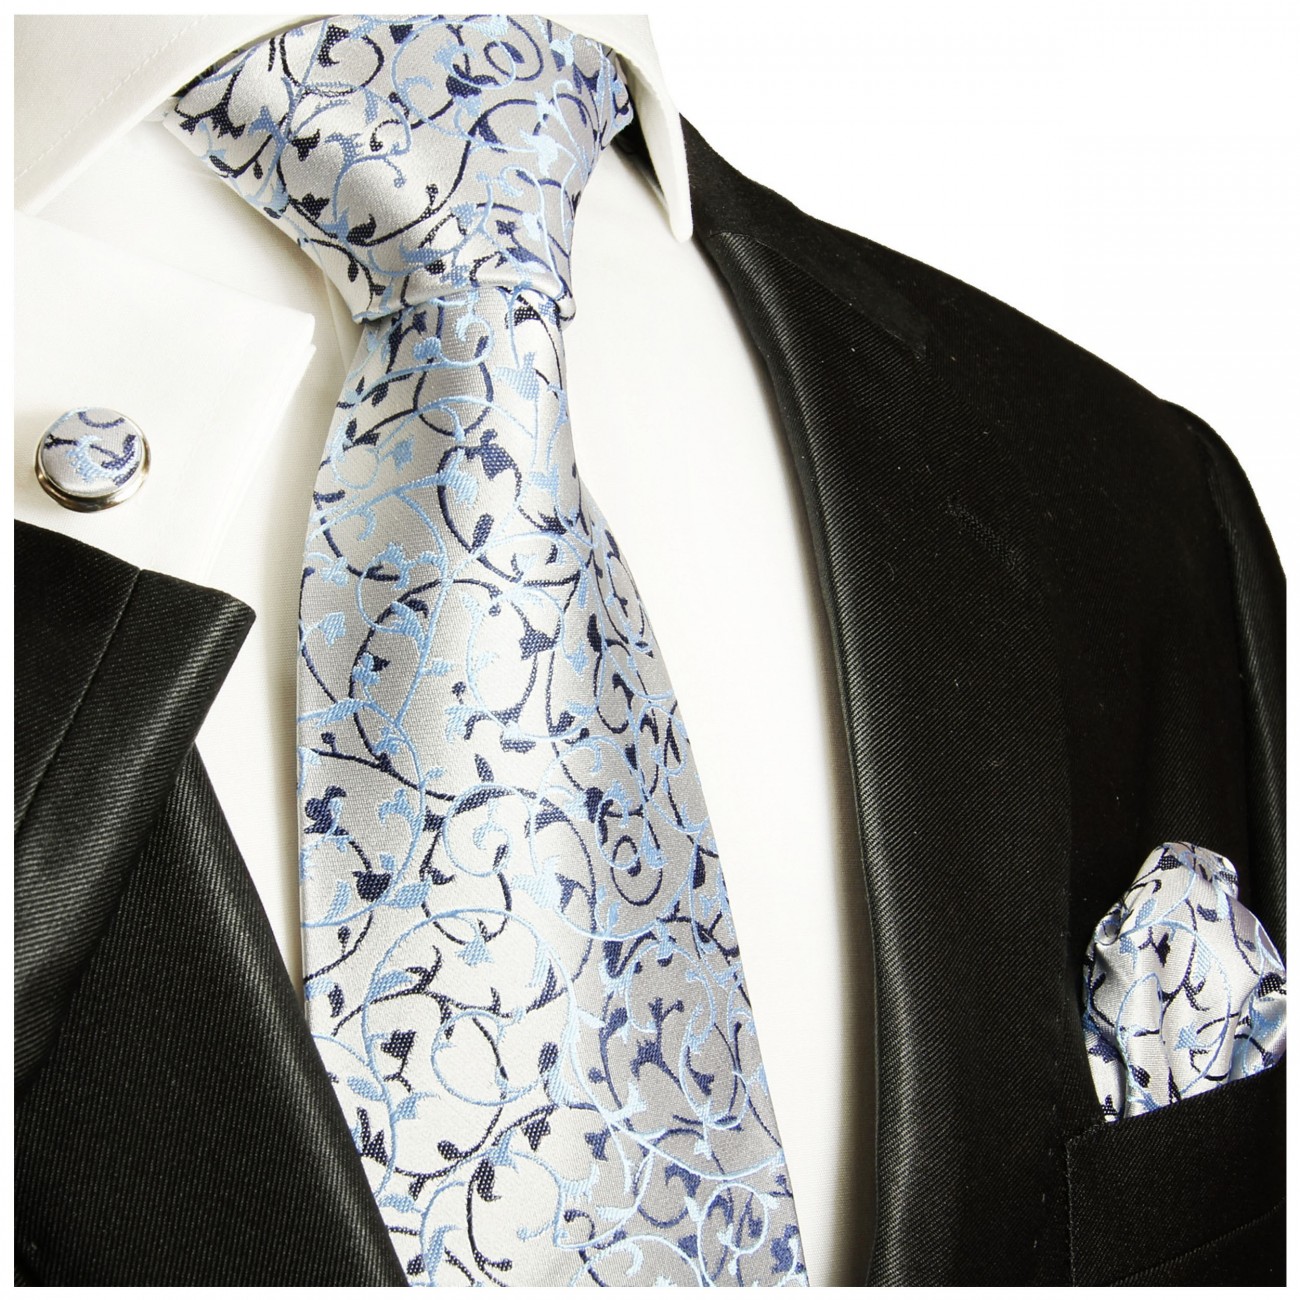 Extra lange Krawatte 165cm - Krawatte Überlänge - silber blau floral